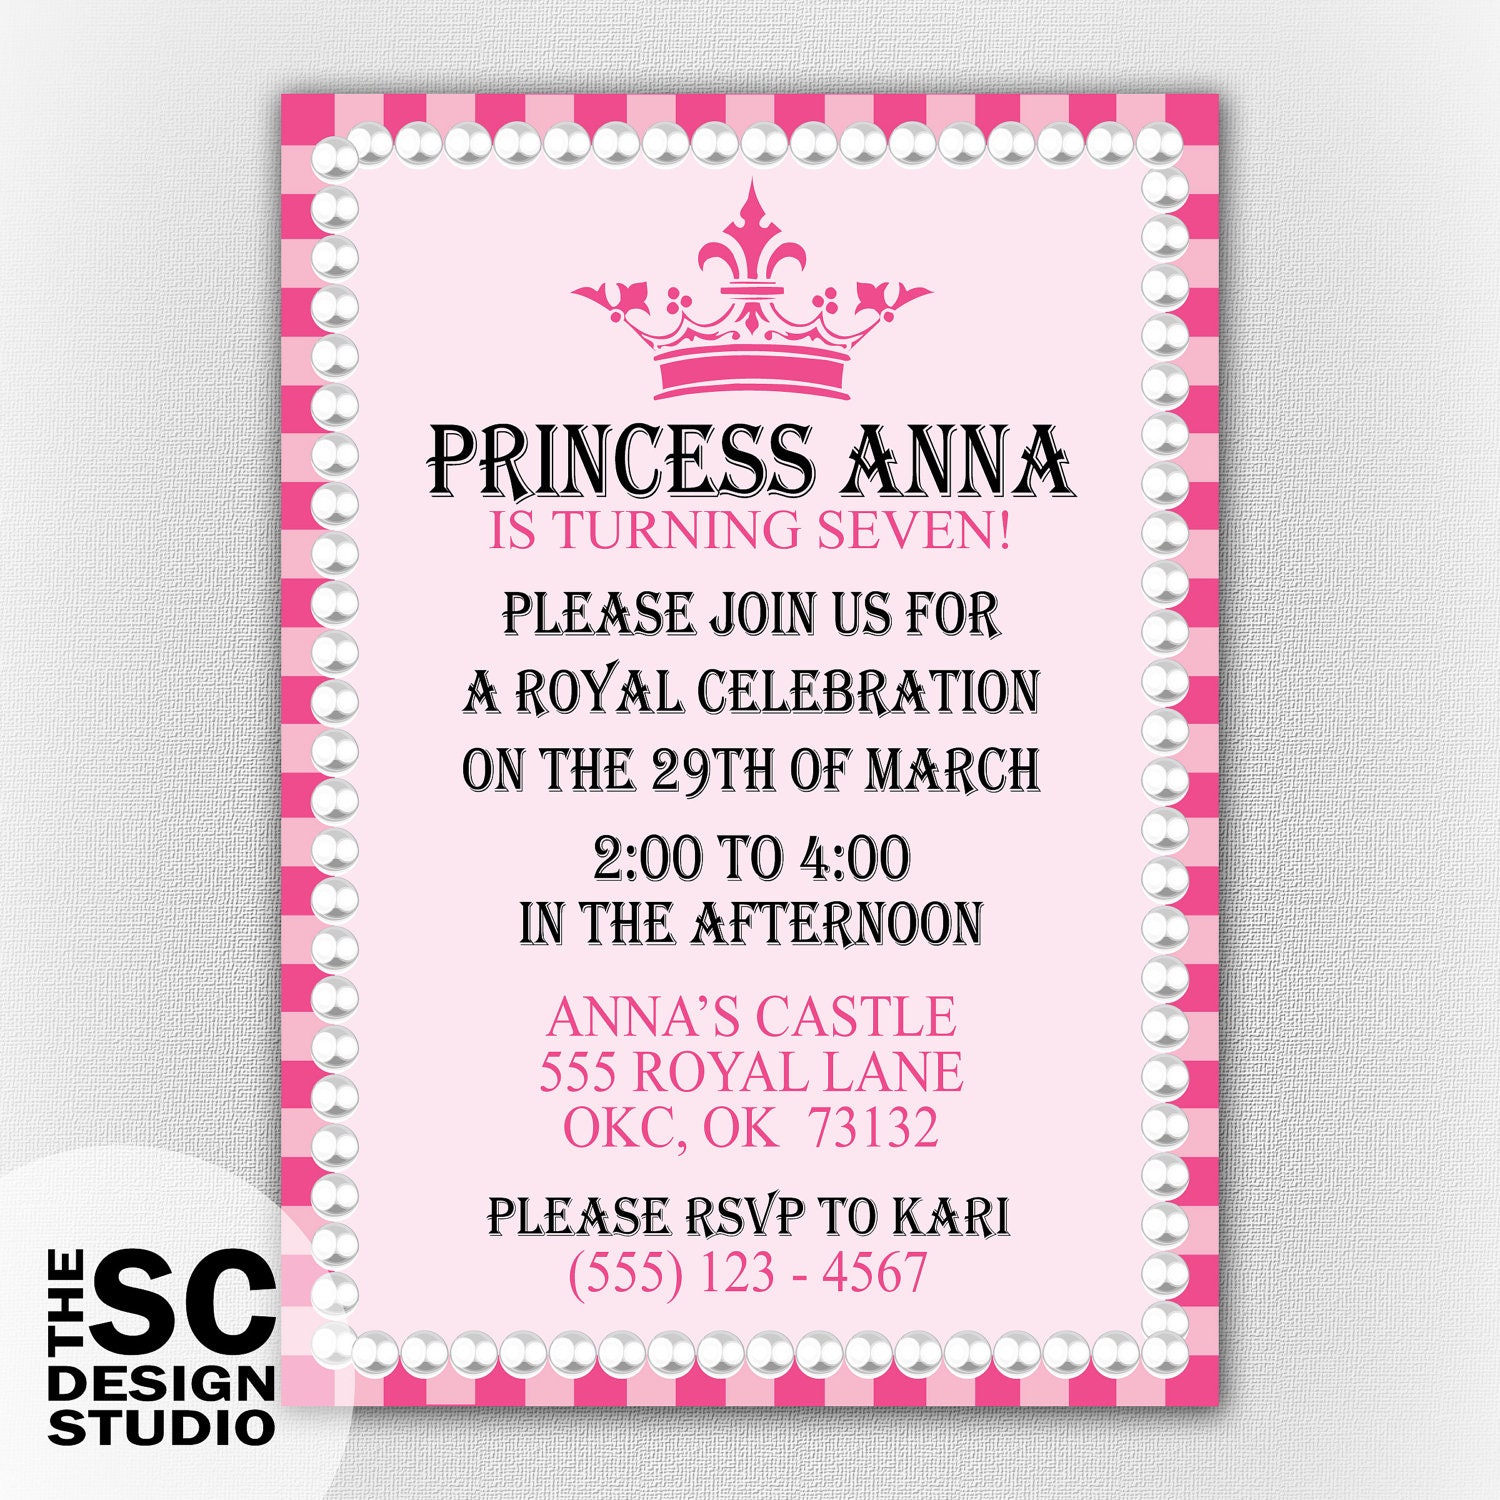 Little Girl Princess Birthday Party Invitation - Royal Celebration - Print At Home Digital File